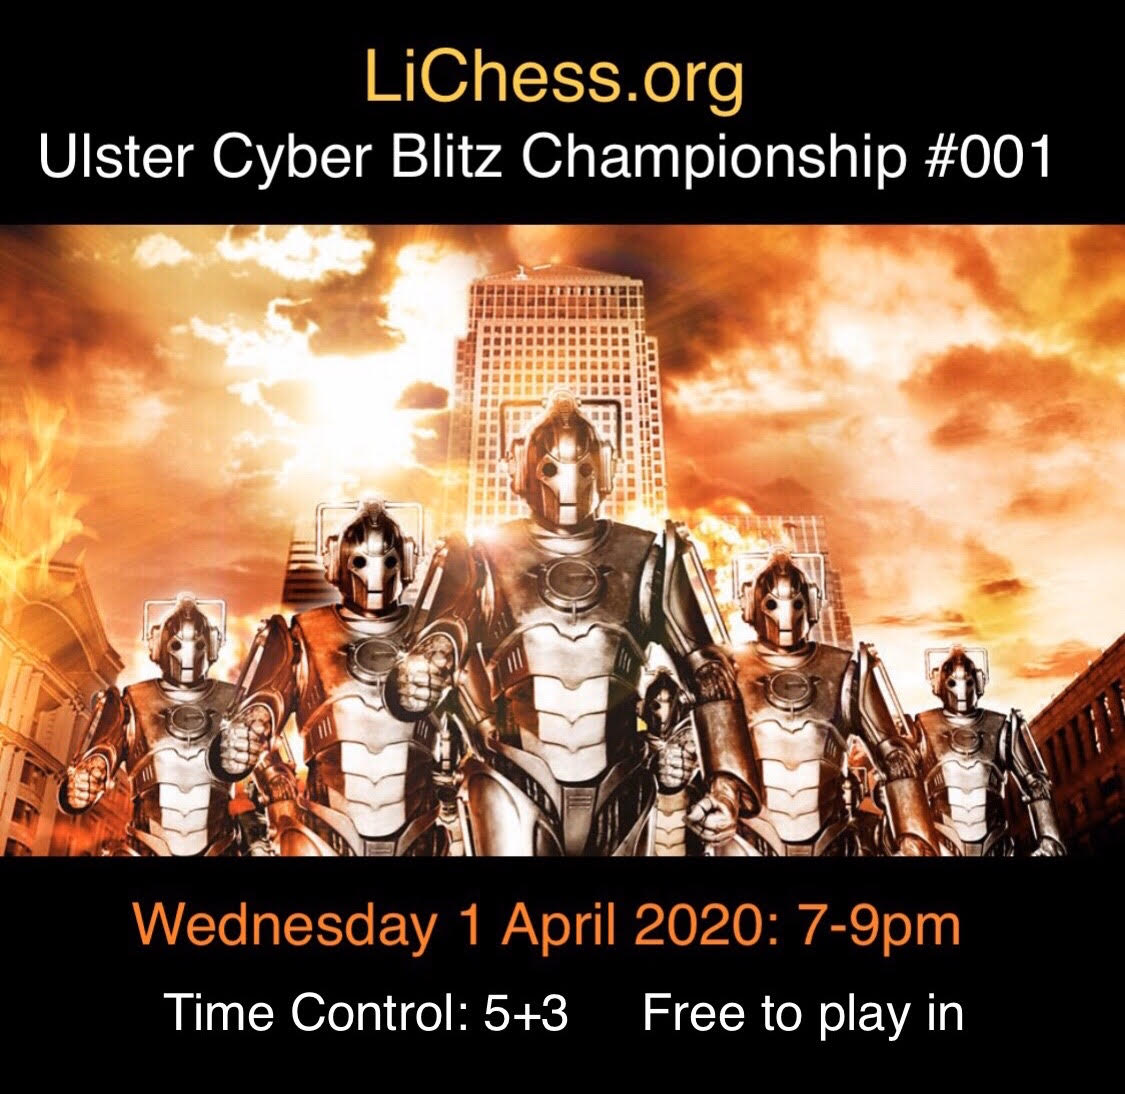 Ulster Cyber Blitz Championship #001